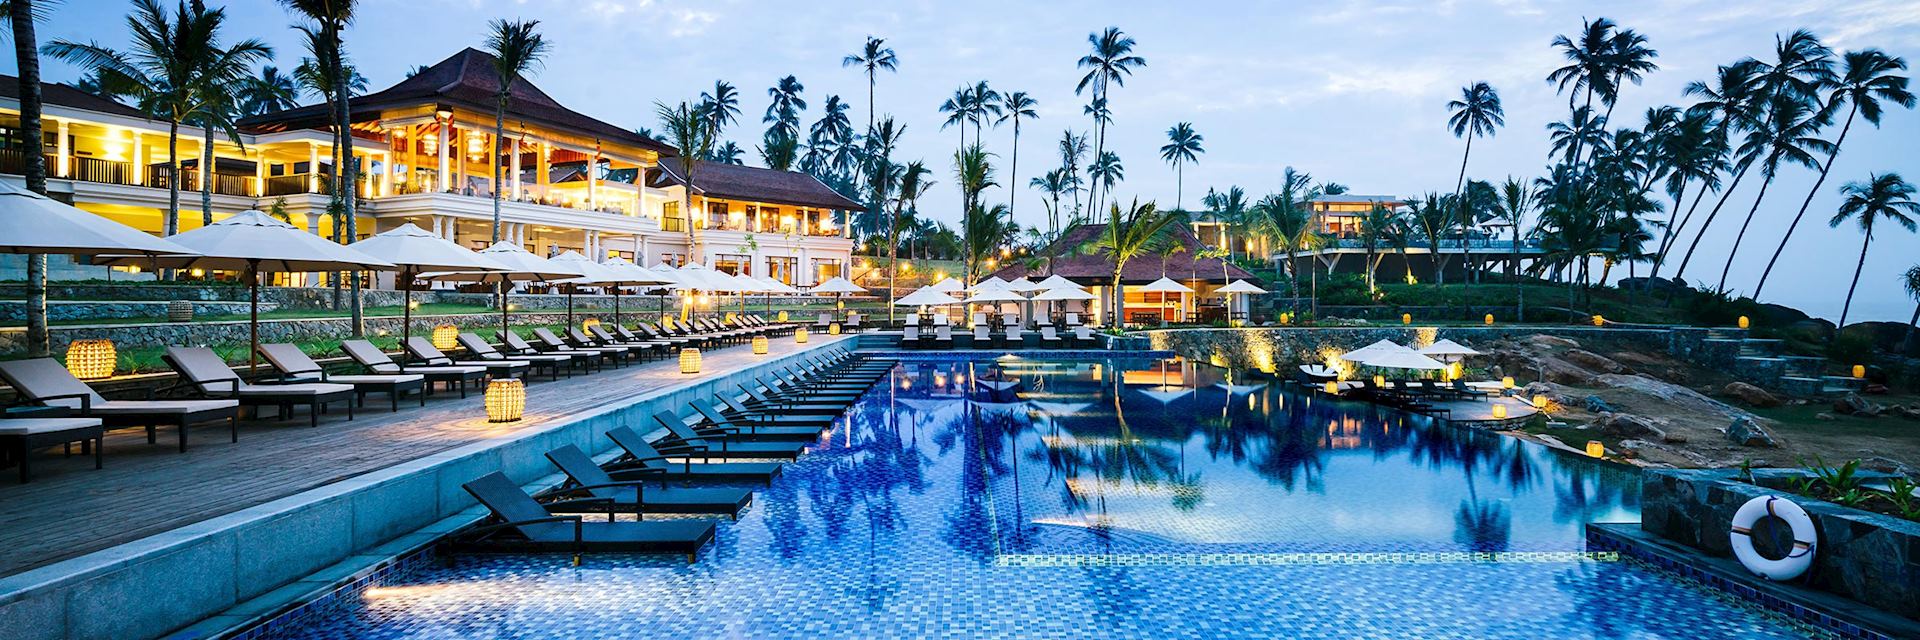 Anantara Peace Haven Tangalle Resort, Sri Lanka